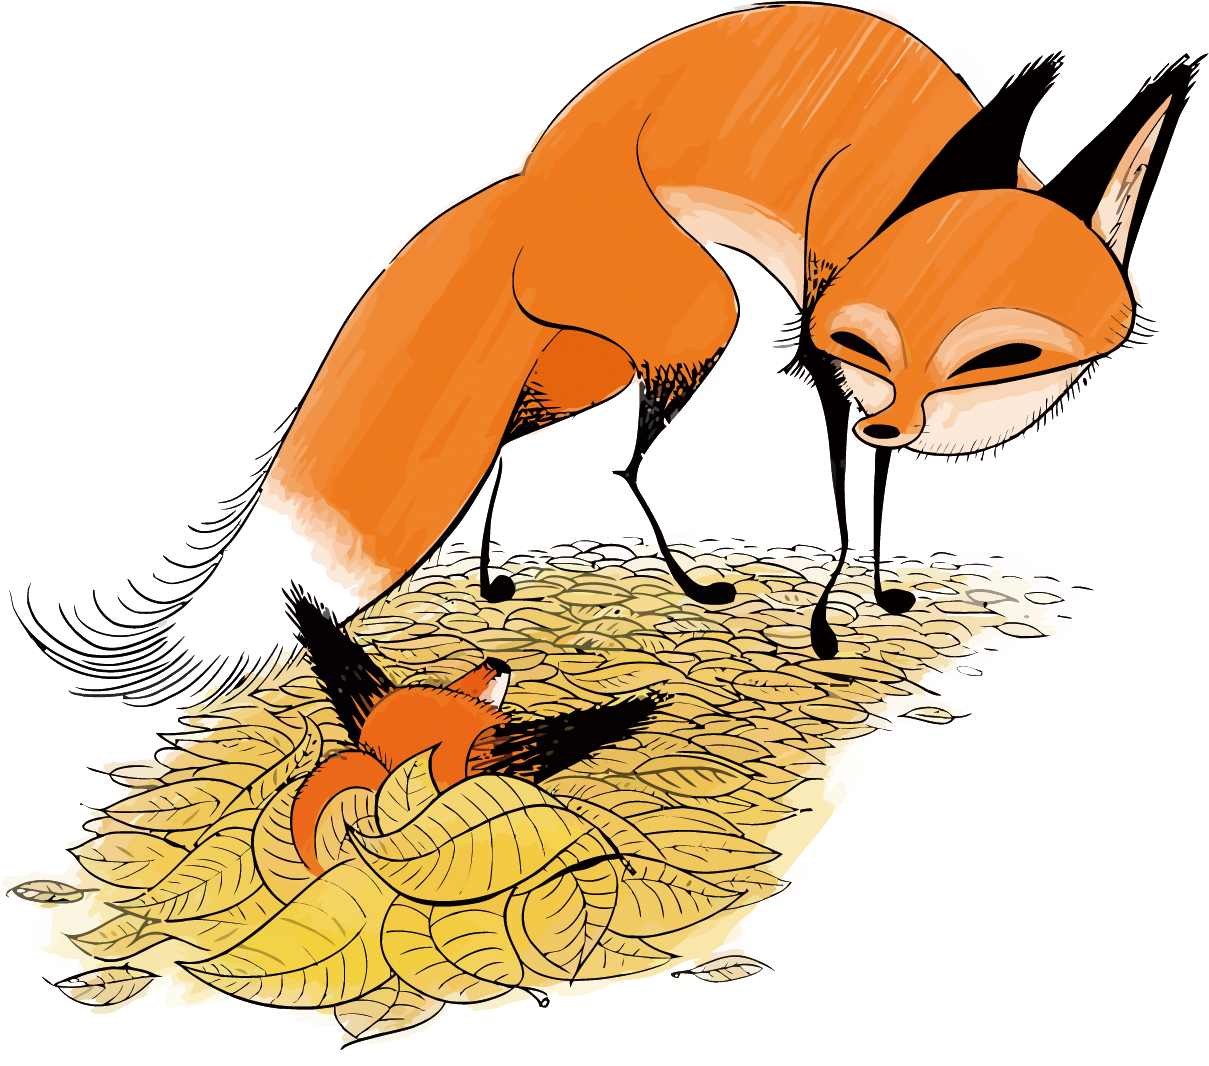 Red Fox Drawing Illustration - Red Fox Drawing Illustration (1500x1500)